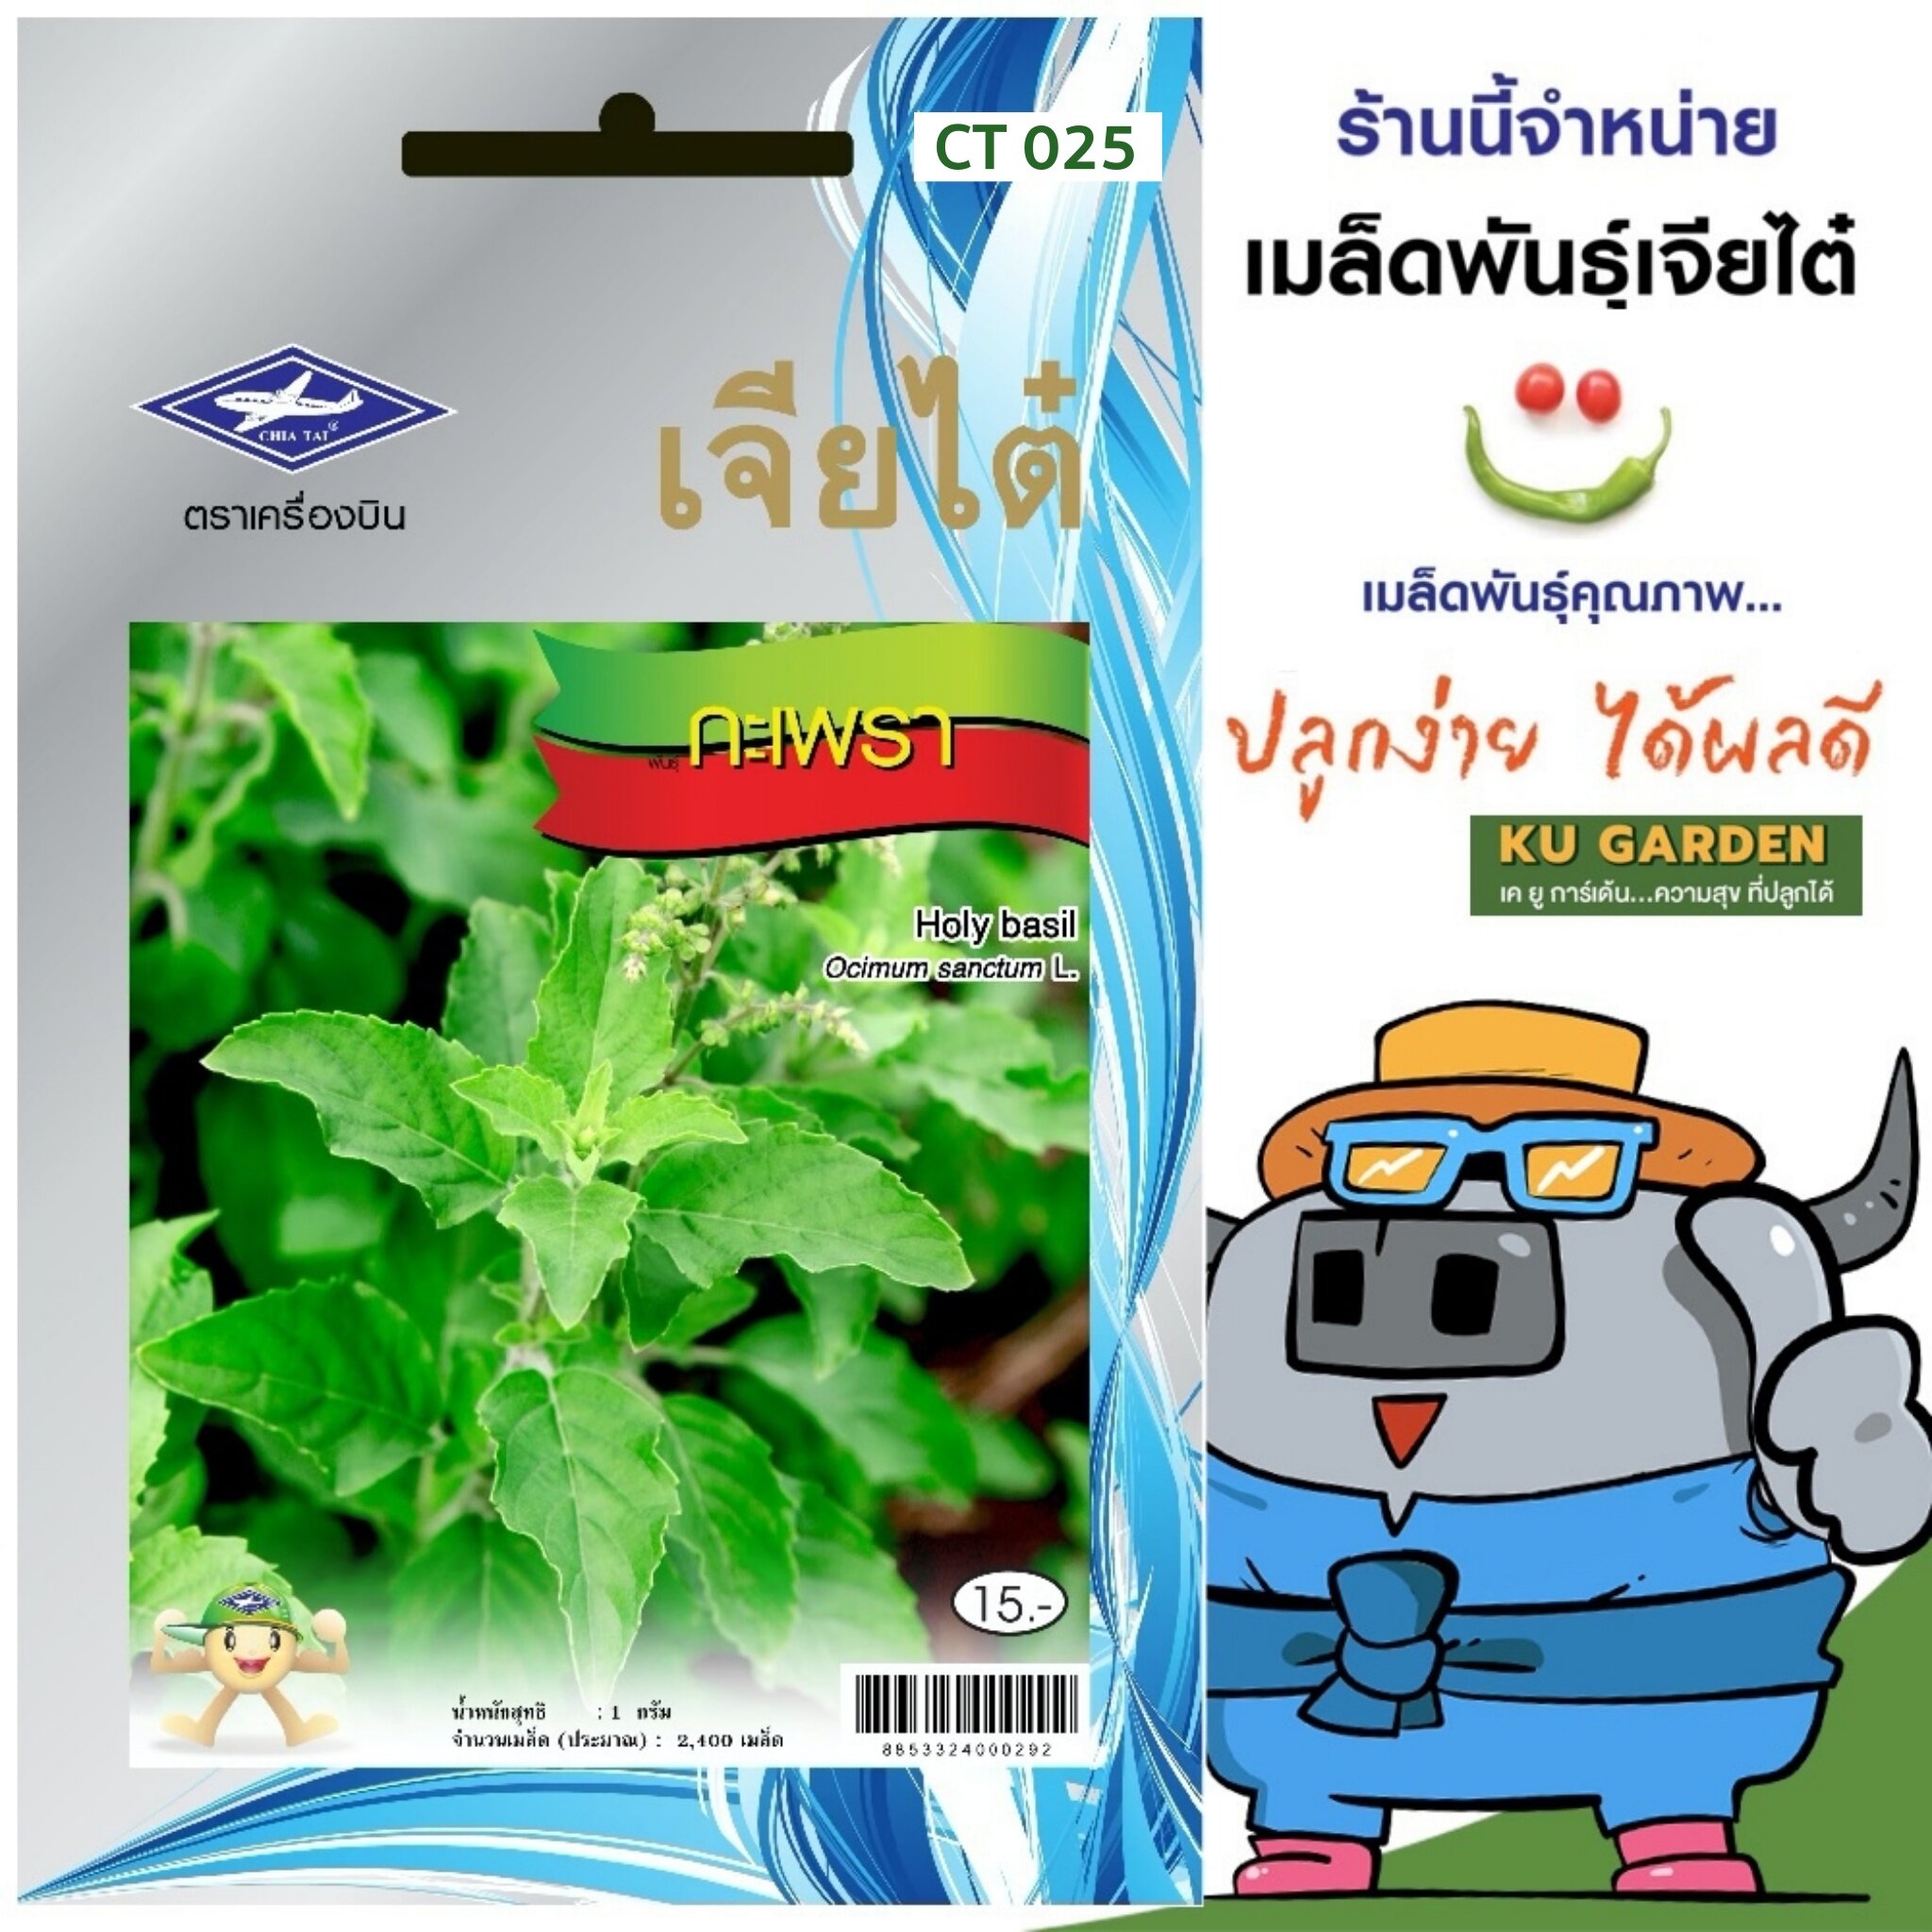 CHIATAI 🇹🇭 ผักซอง เจียไต๋ กะเพรา O025 ประมาณ 2,400 เมล็ด เมล็ดพันธุ์ผัก กระพรา เมล็ดผัก เมล็ดพืช ผักสวนครัว